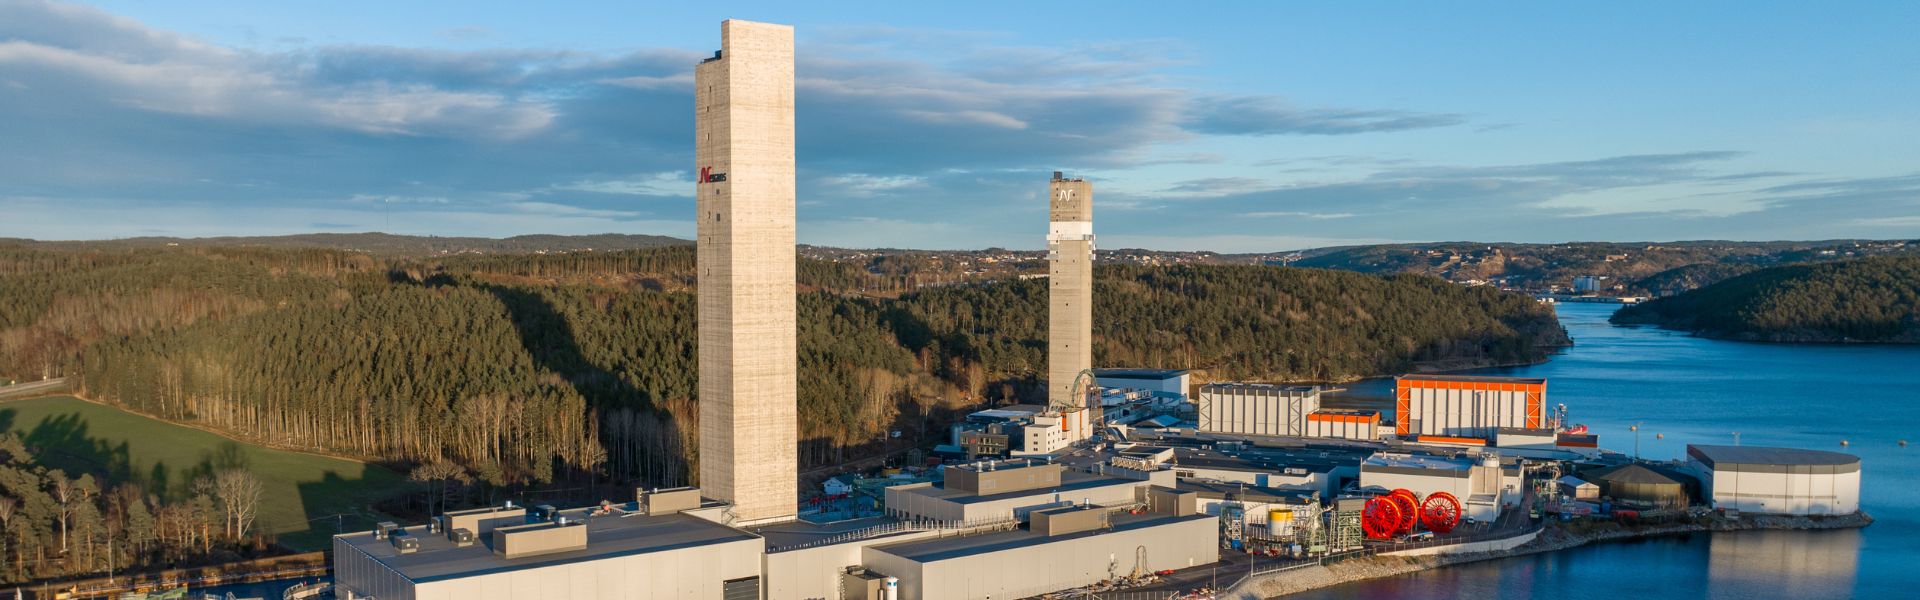 Nexans facility in Halden, Norway